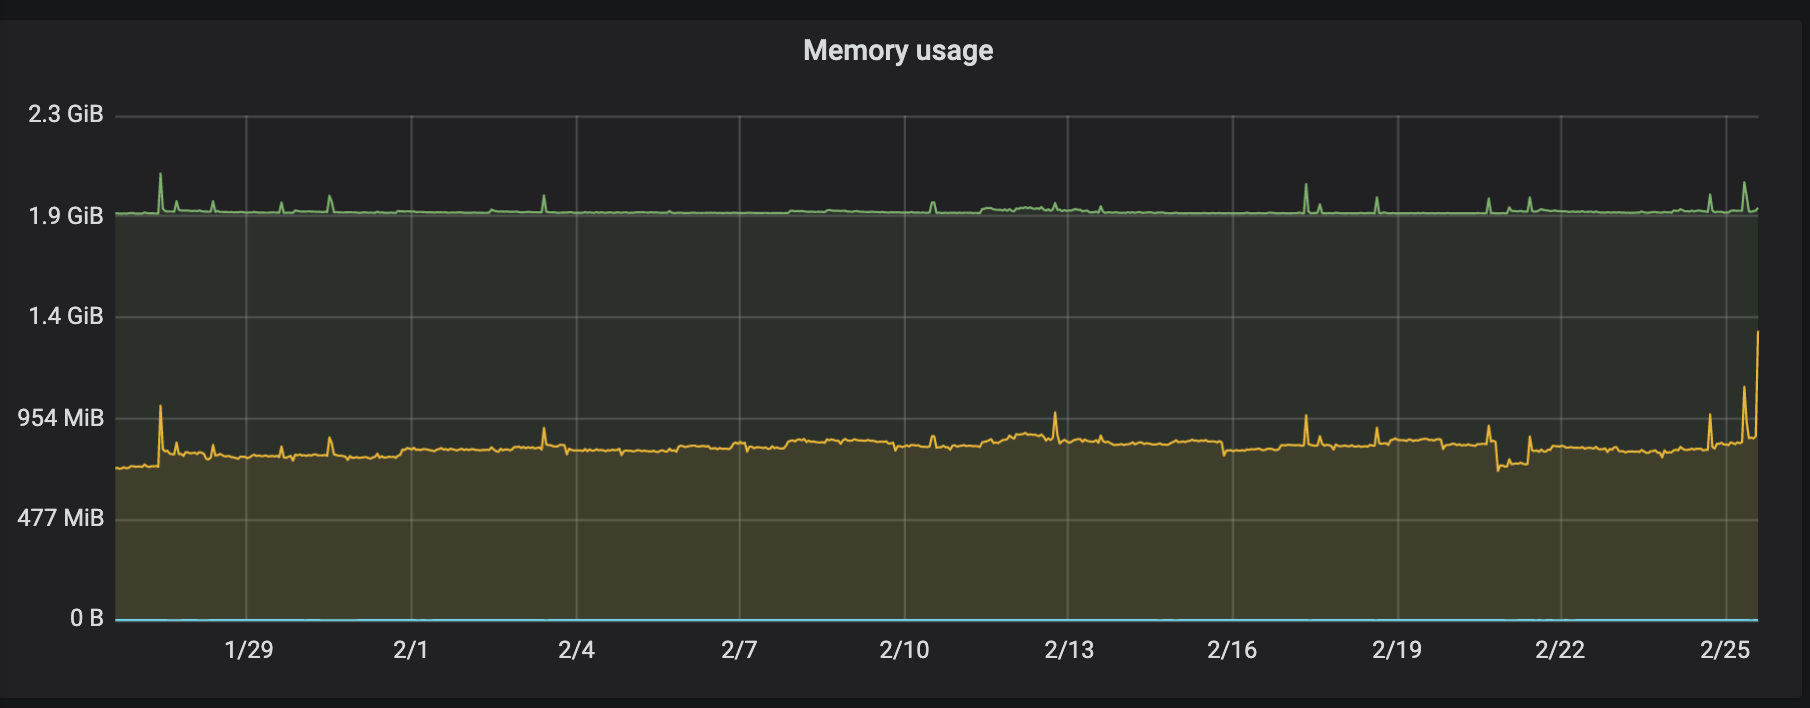 VictoriaMetrics memory usage